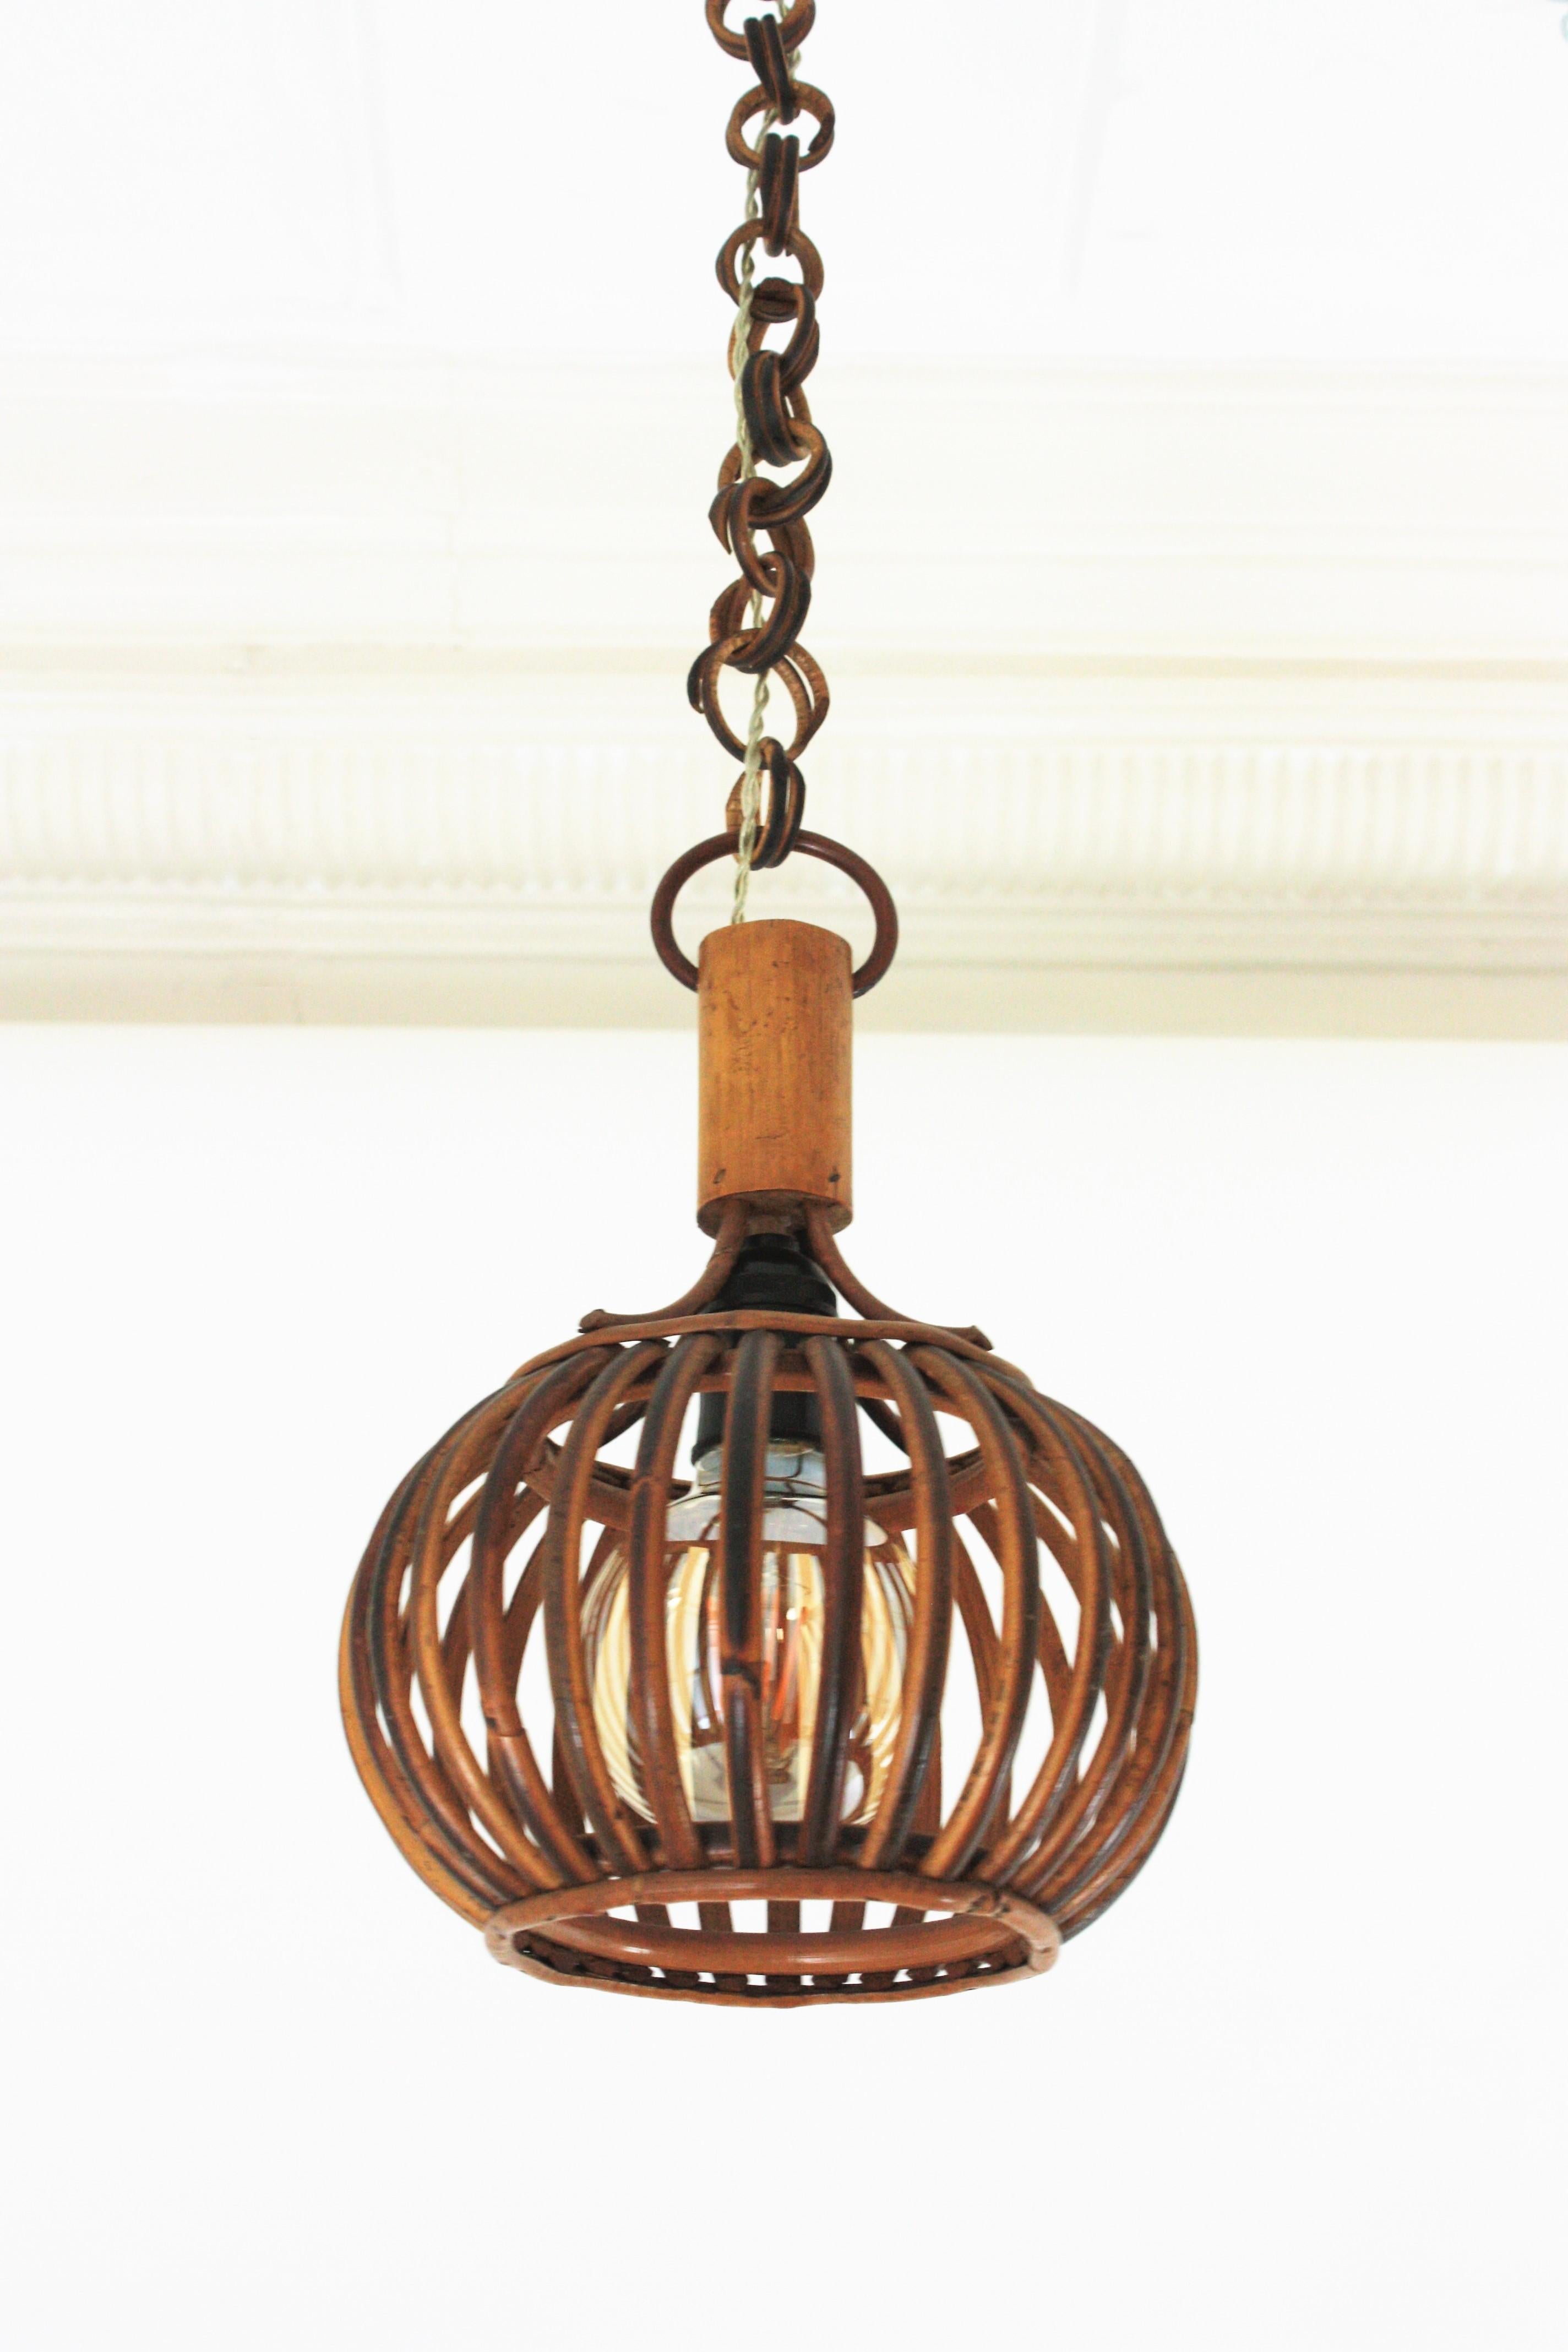 Louis Sognot Rattan Pendant Hanging Light / Lantern, 1950s For Sale 5